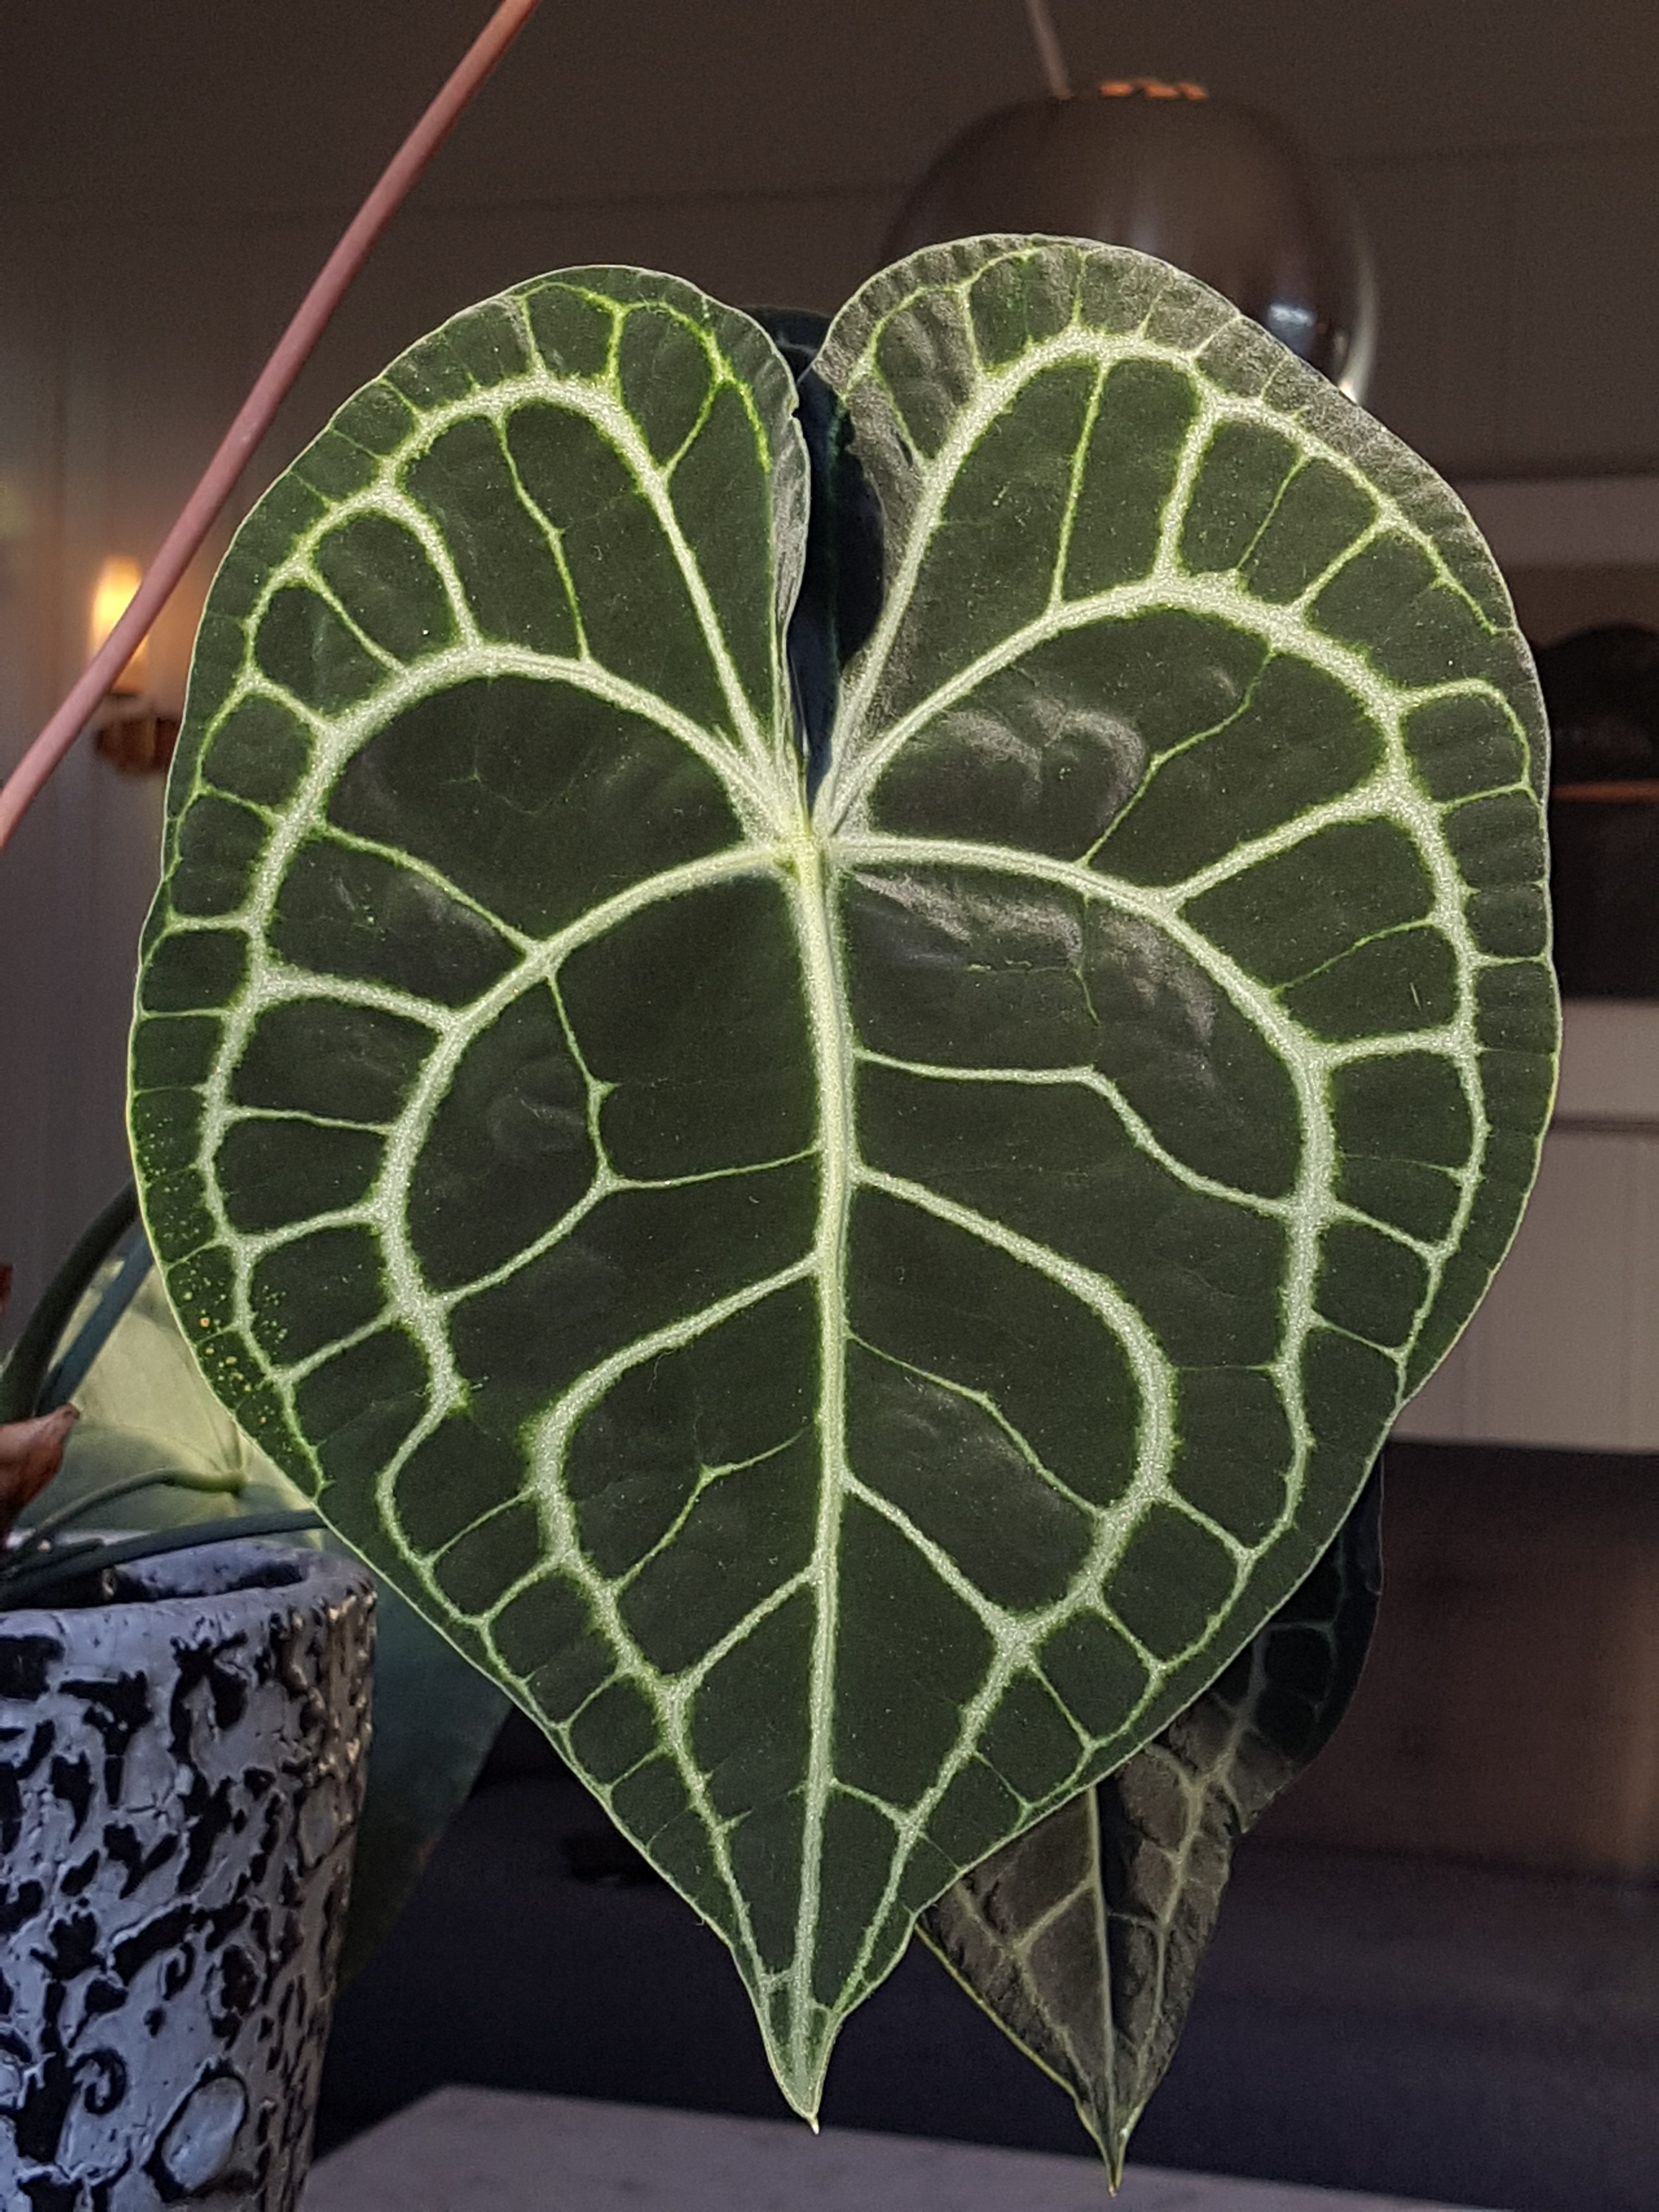 Anthurium clarinervium til alle hjerters dag - SkarpiHagen